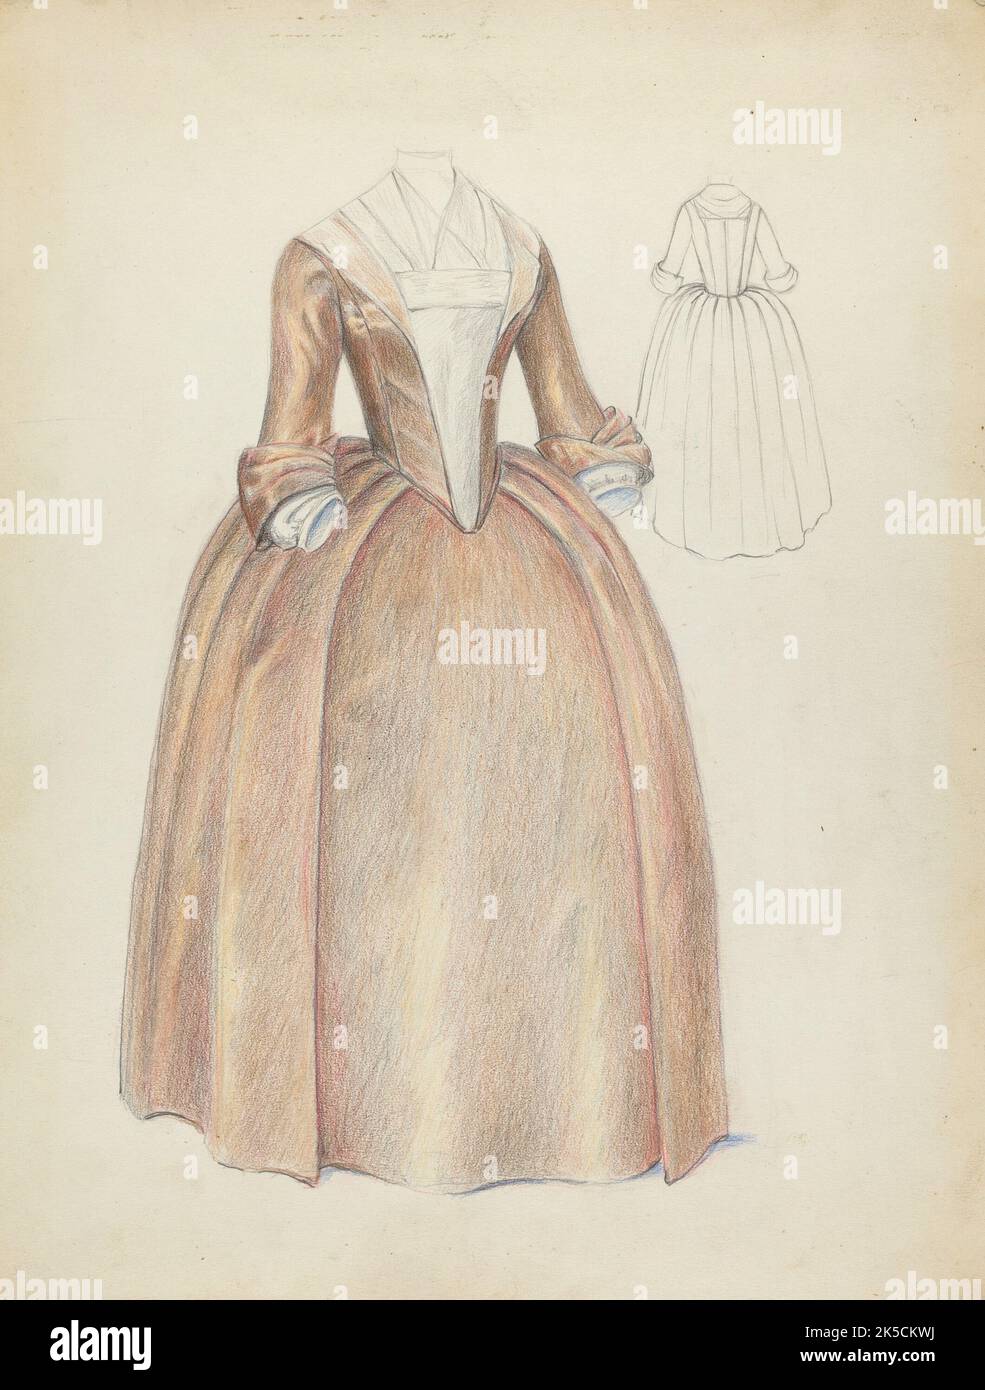 Woman's Dress, c. 1940. Stock Photo